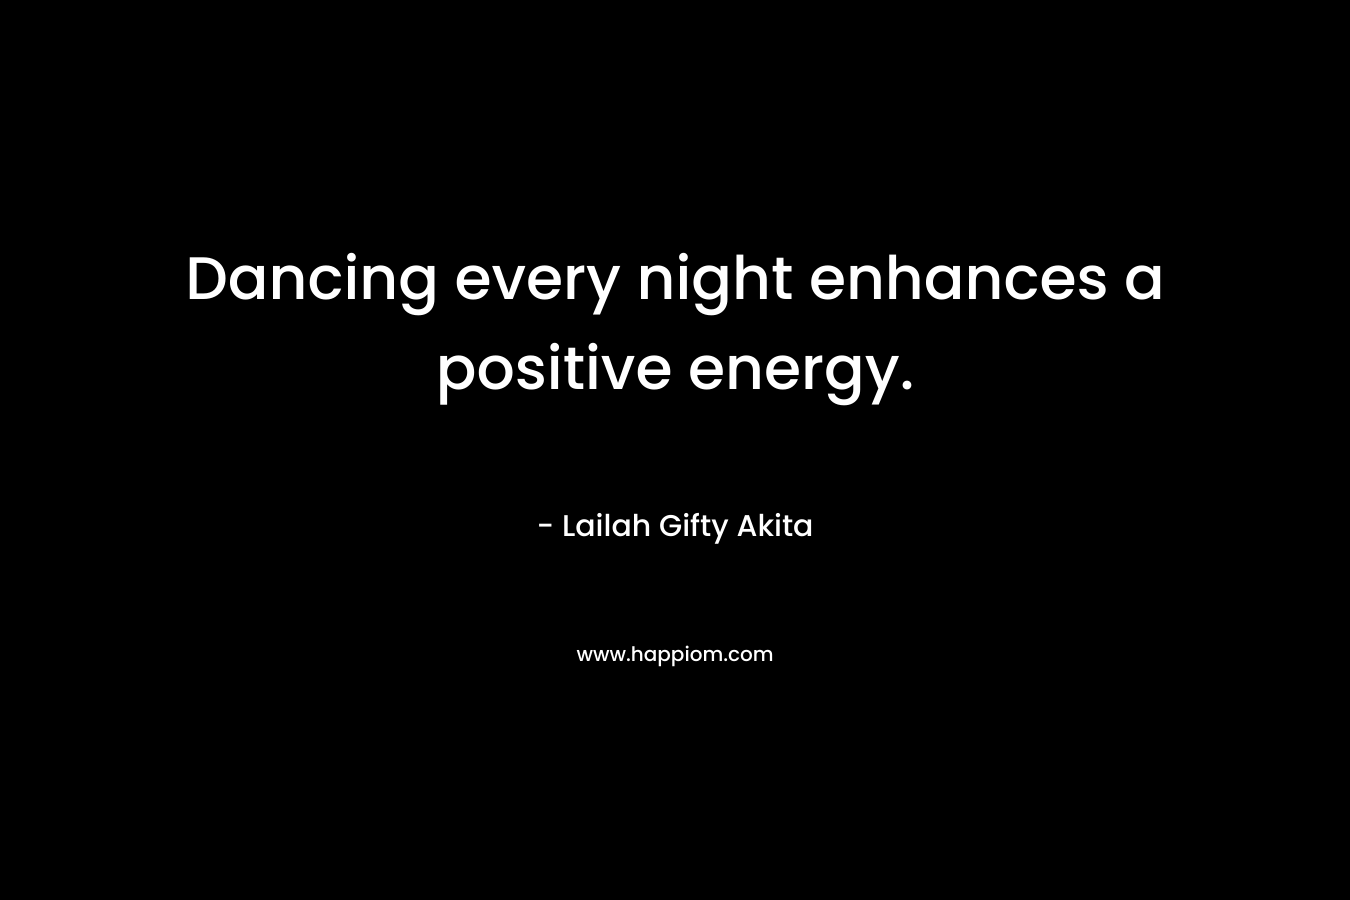 Dancing every night enhances a positive energy.